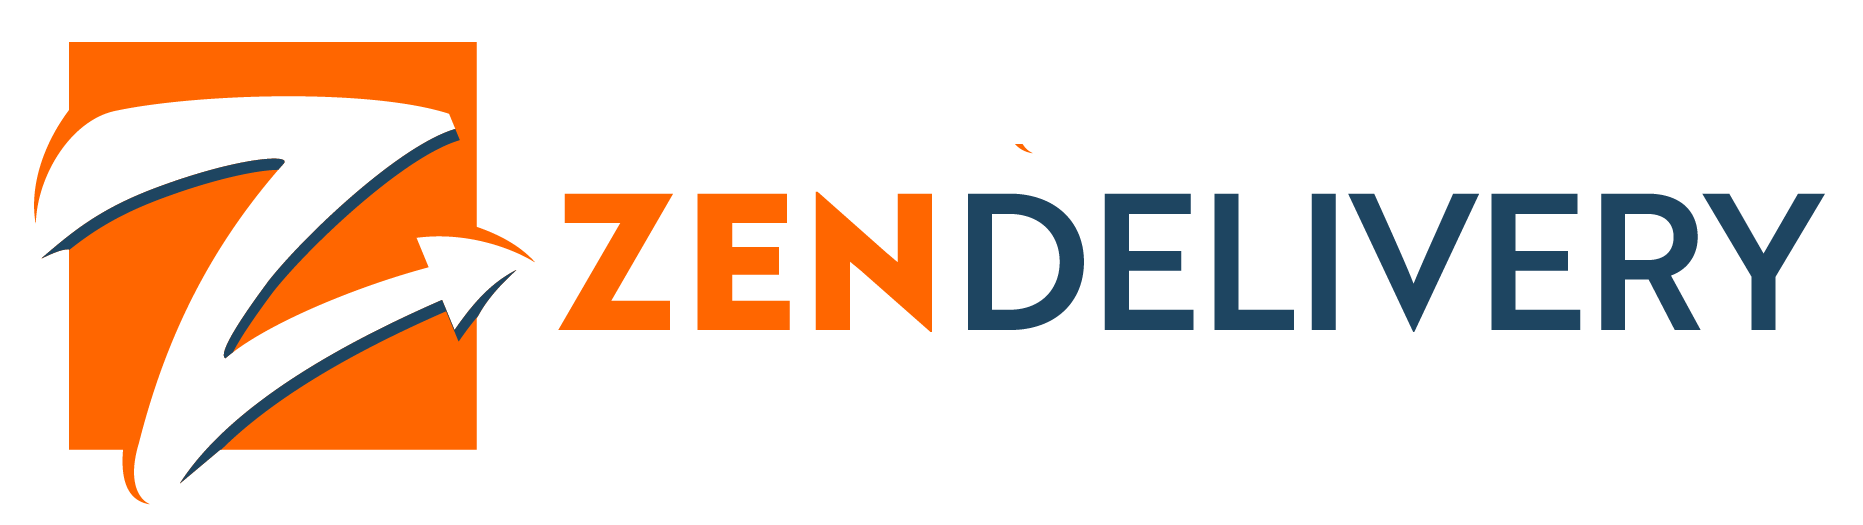 ZenDelivery Logo